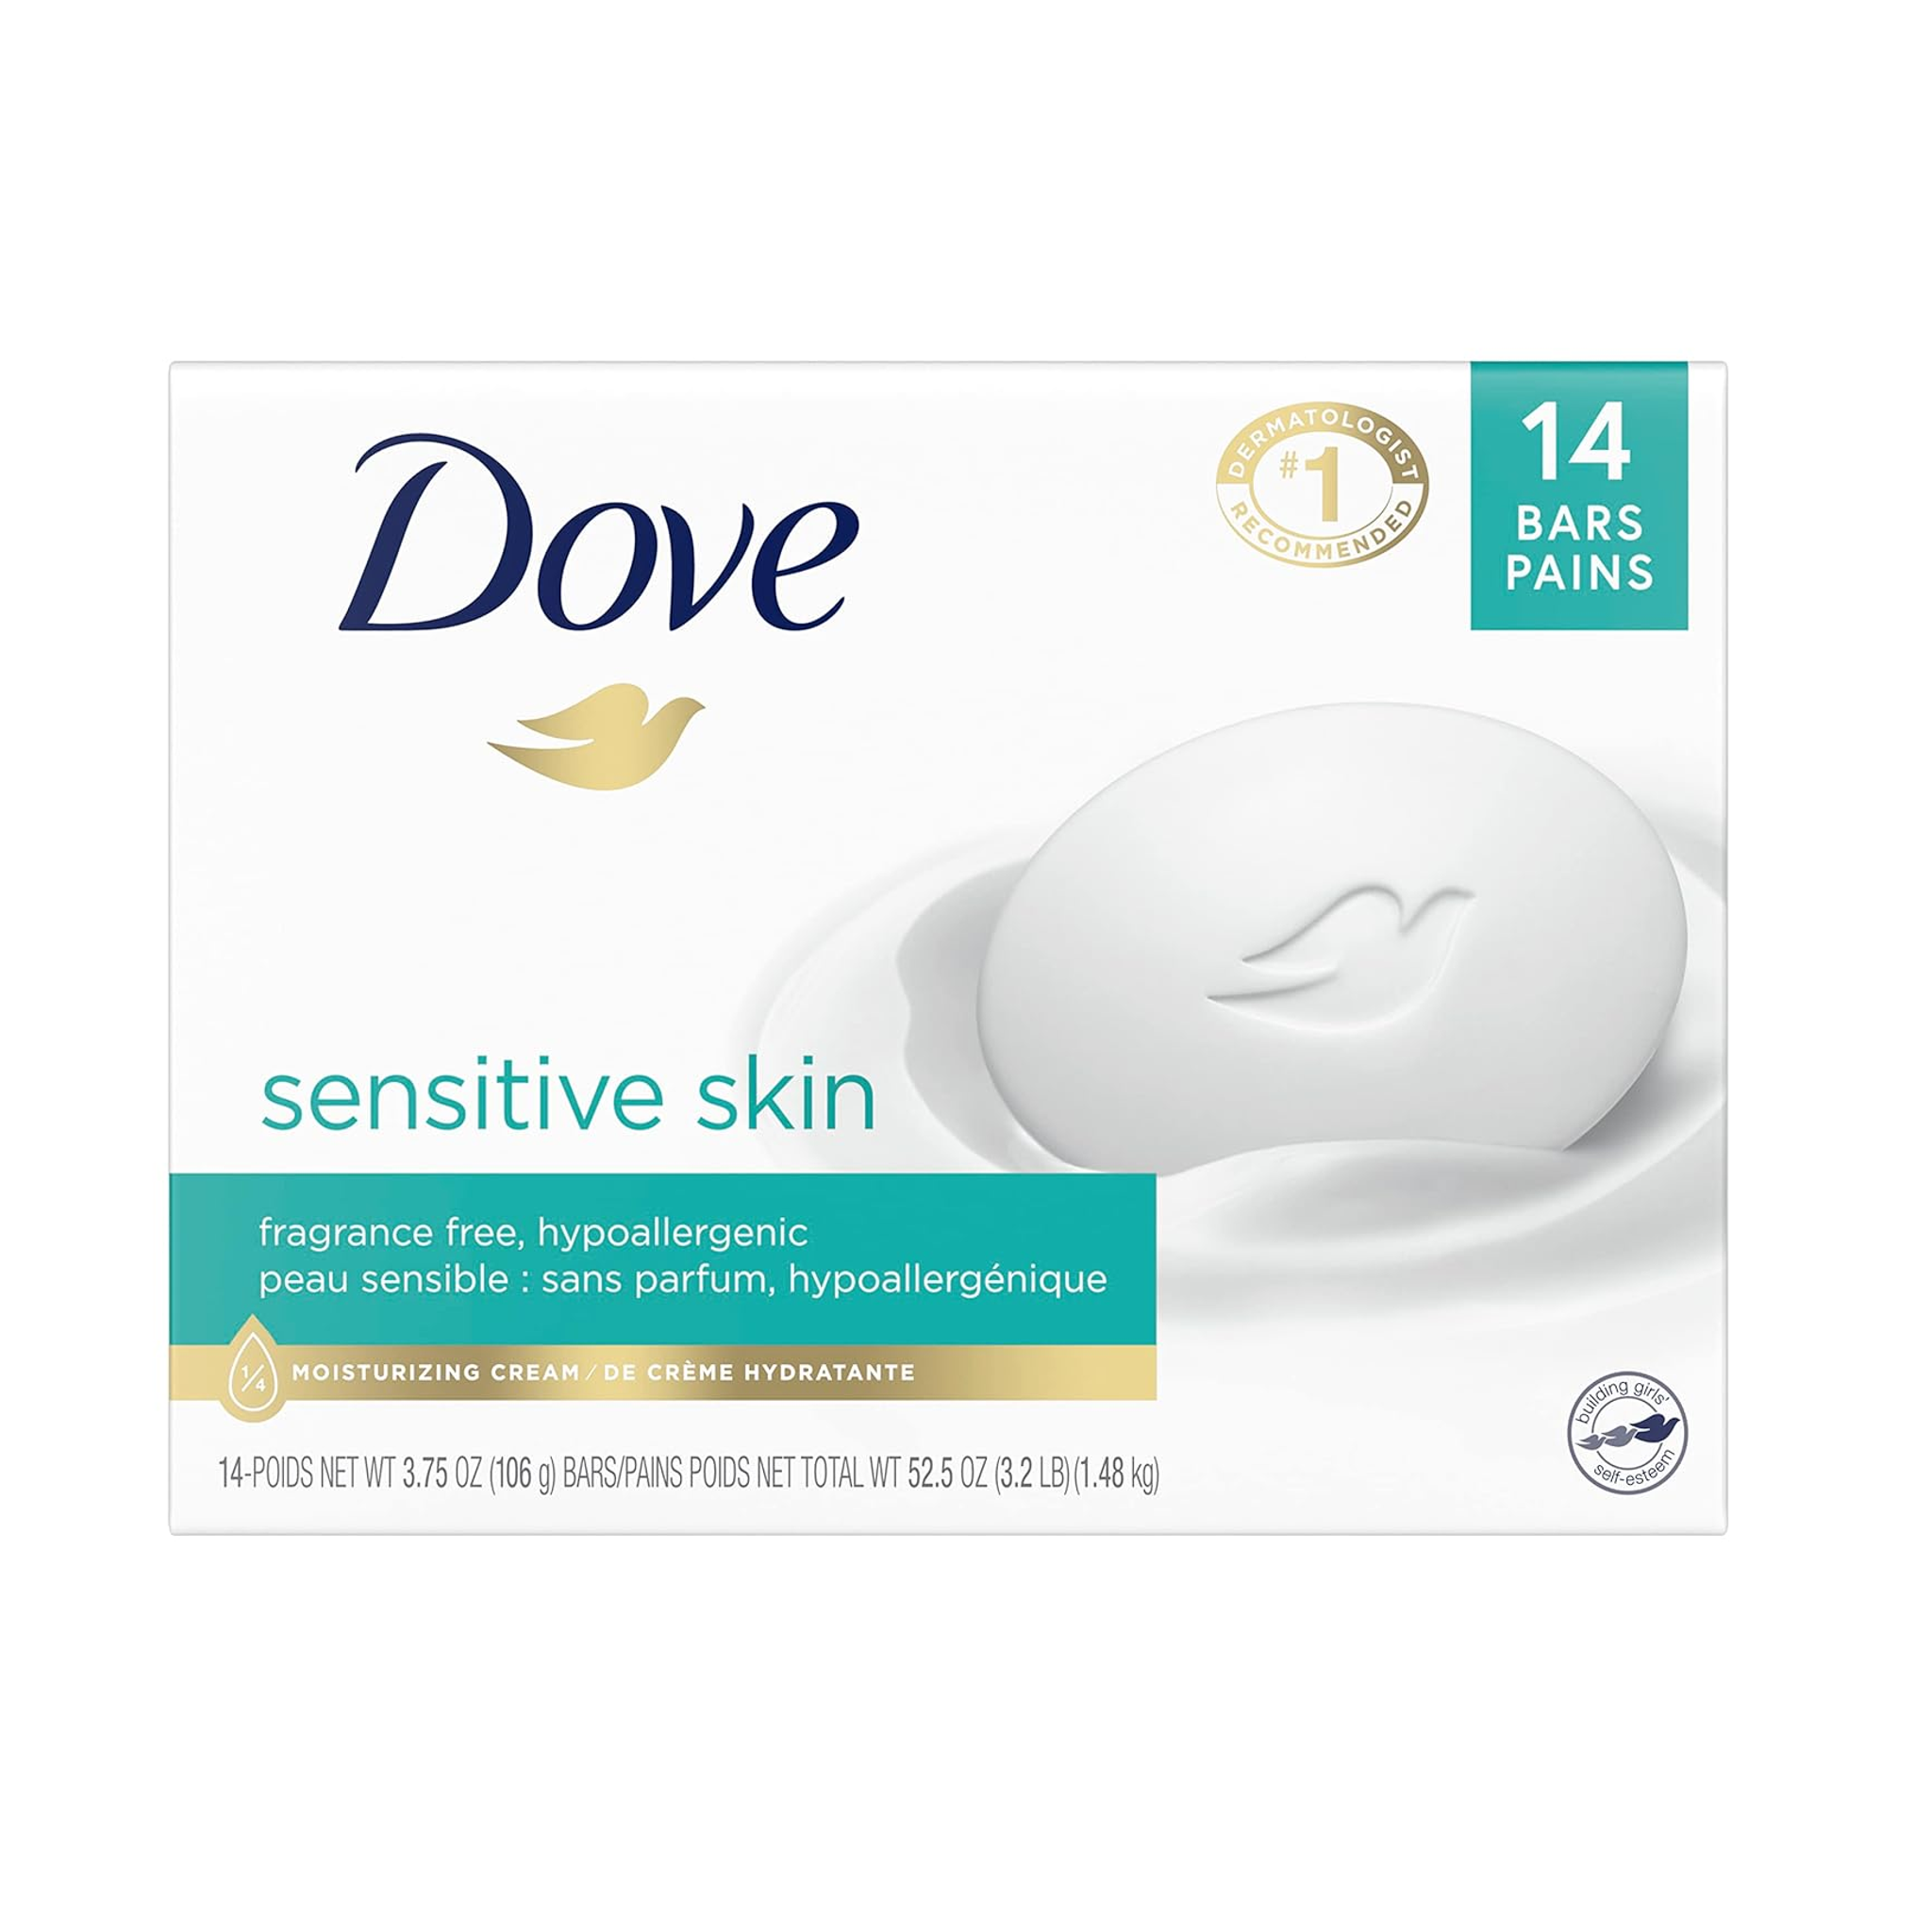 14 Bars of Dove Sensitive Skin Beauty Soap